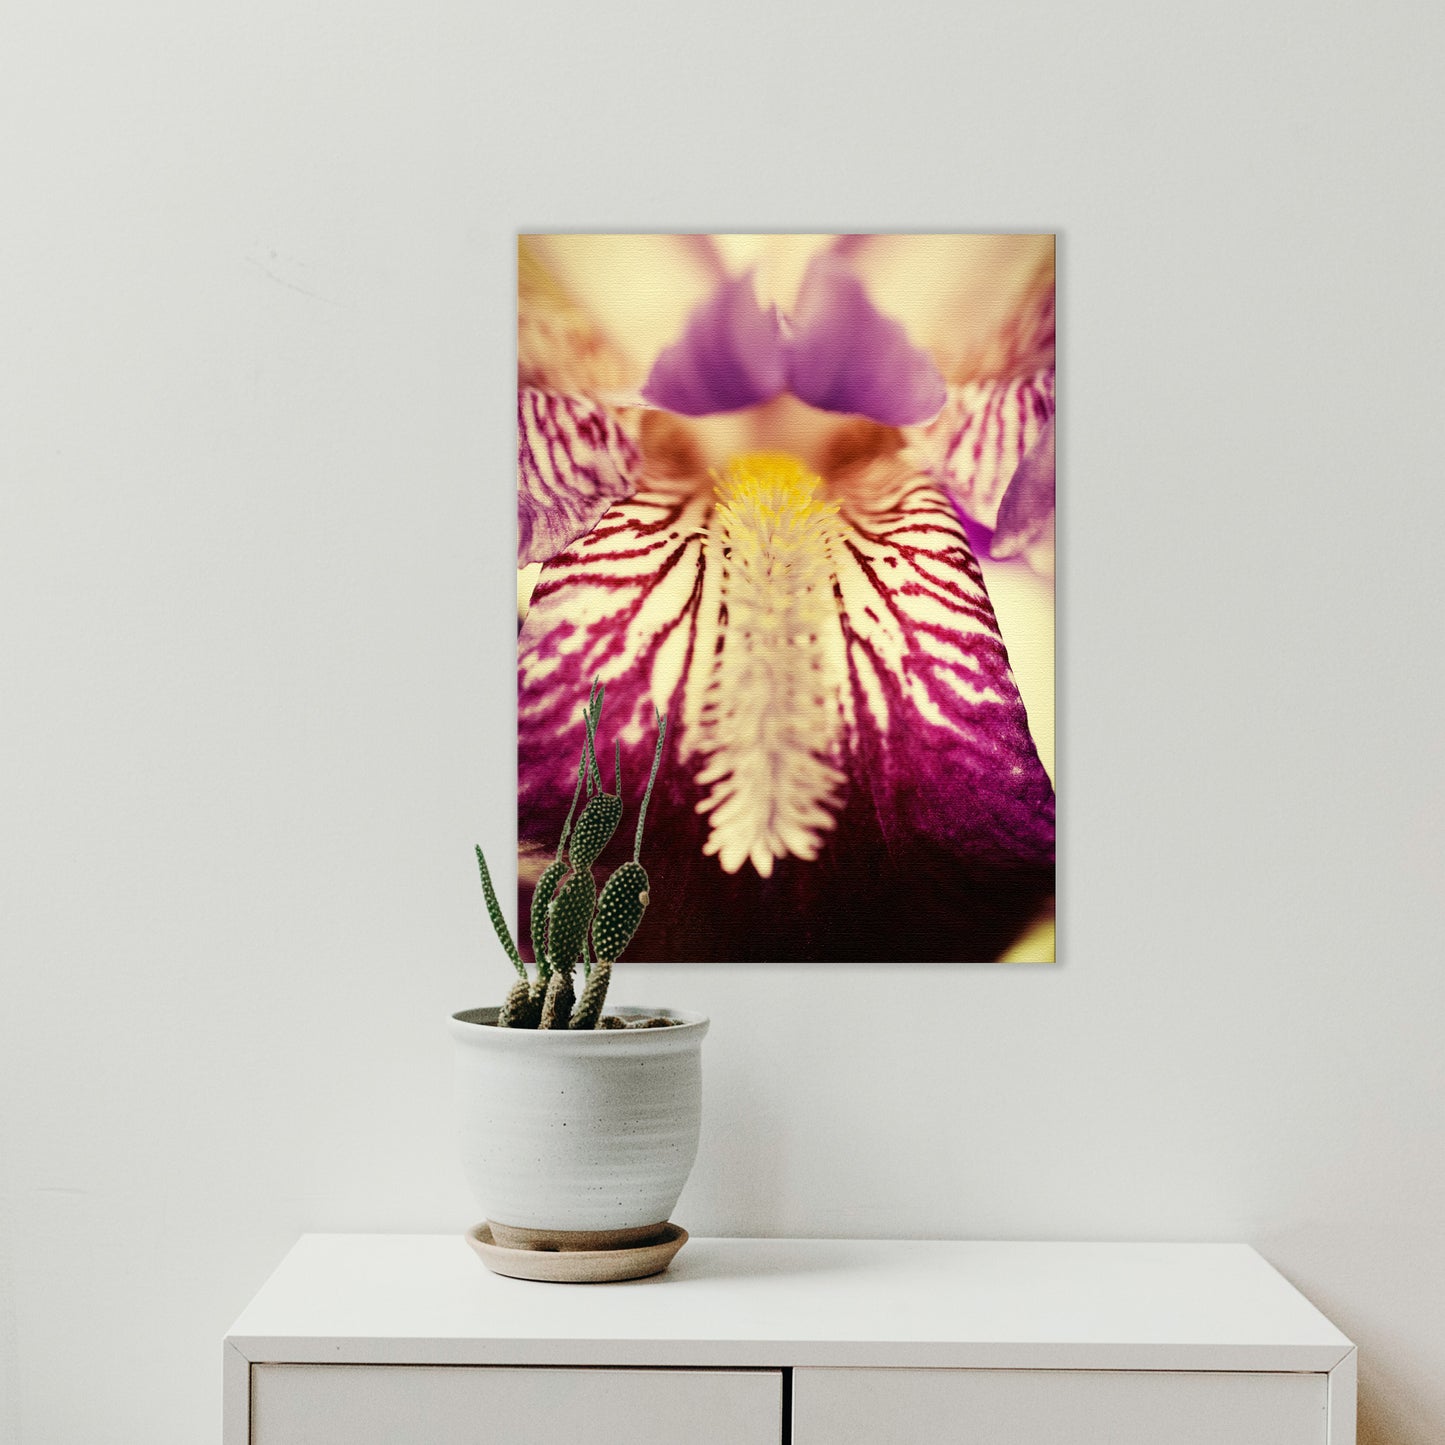 Big Living Room Canvas: Antiqued Iris - Botanical / Floral / Flora / Flowers / Nature Photograph Canvas Wall Art Print - Artwork